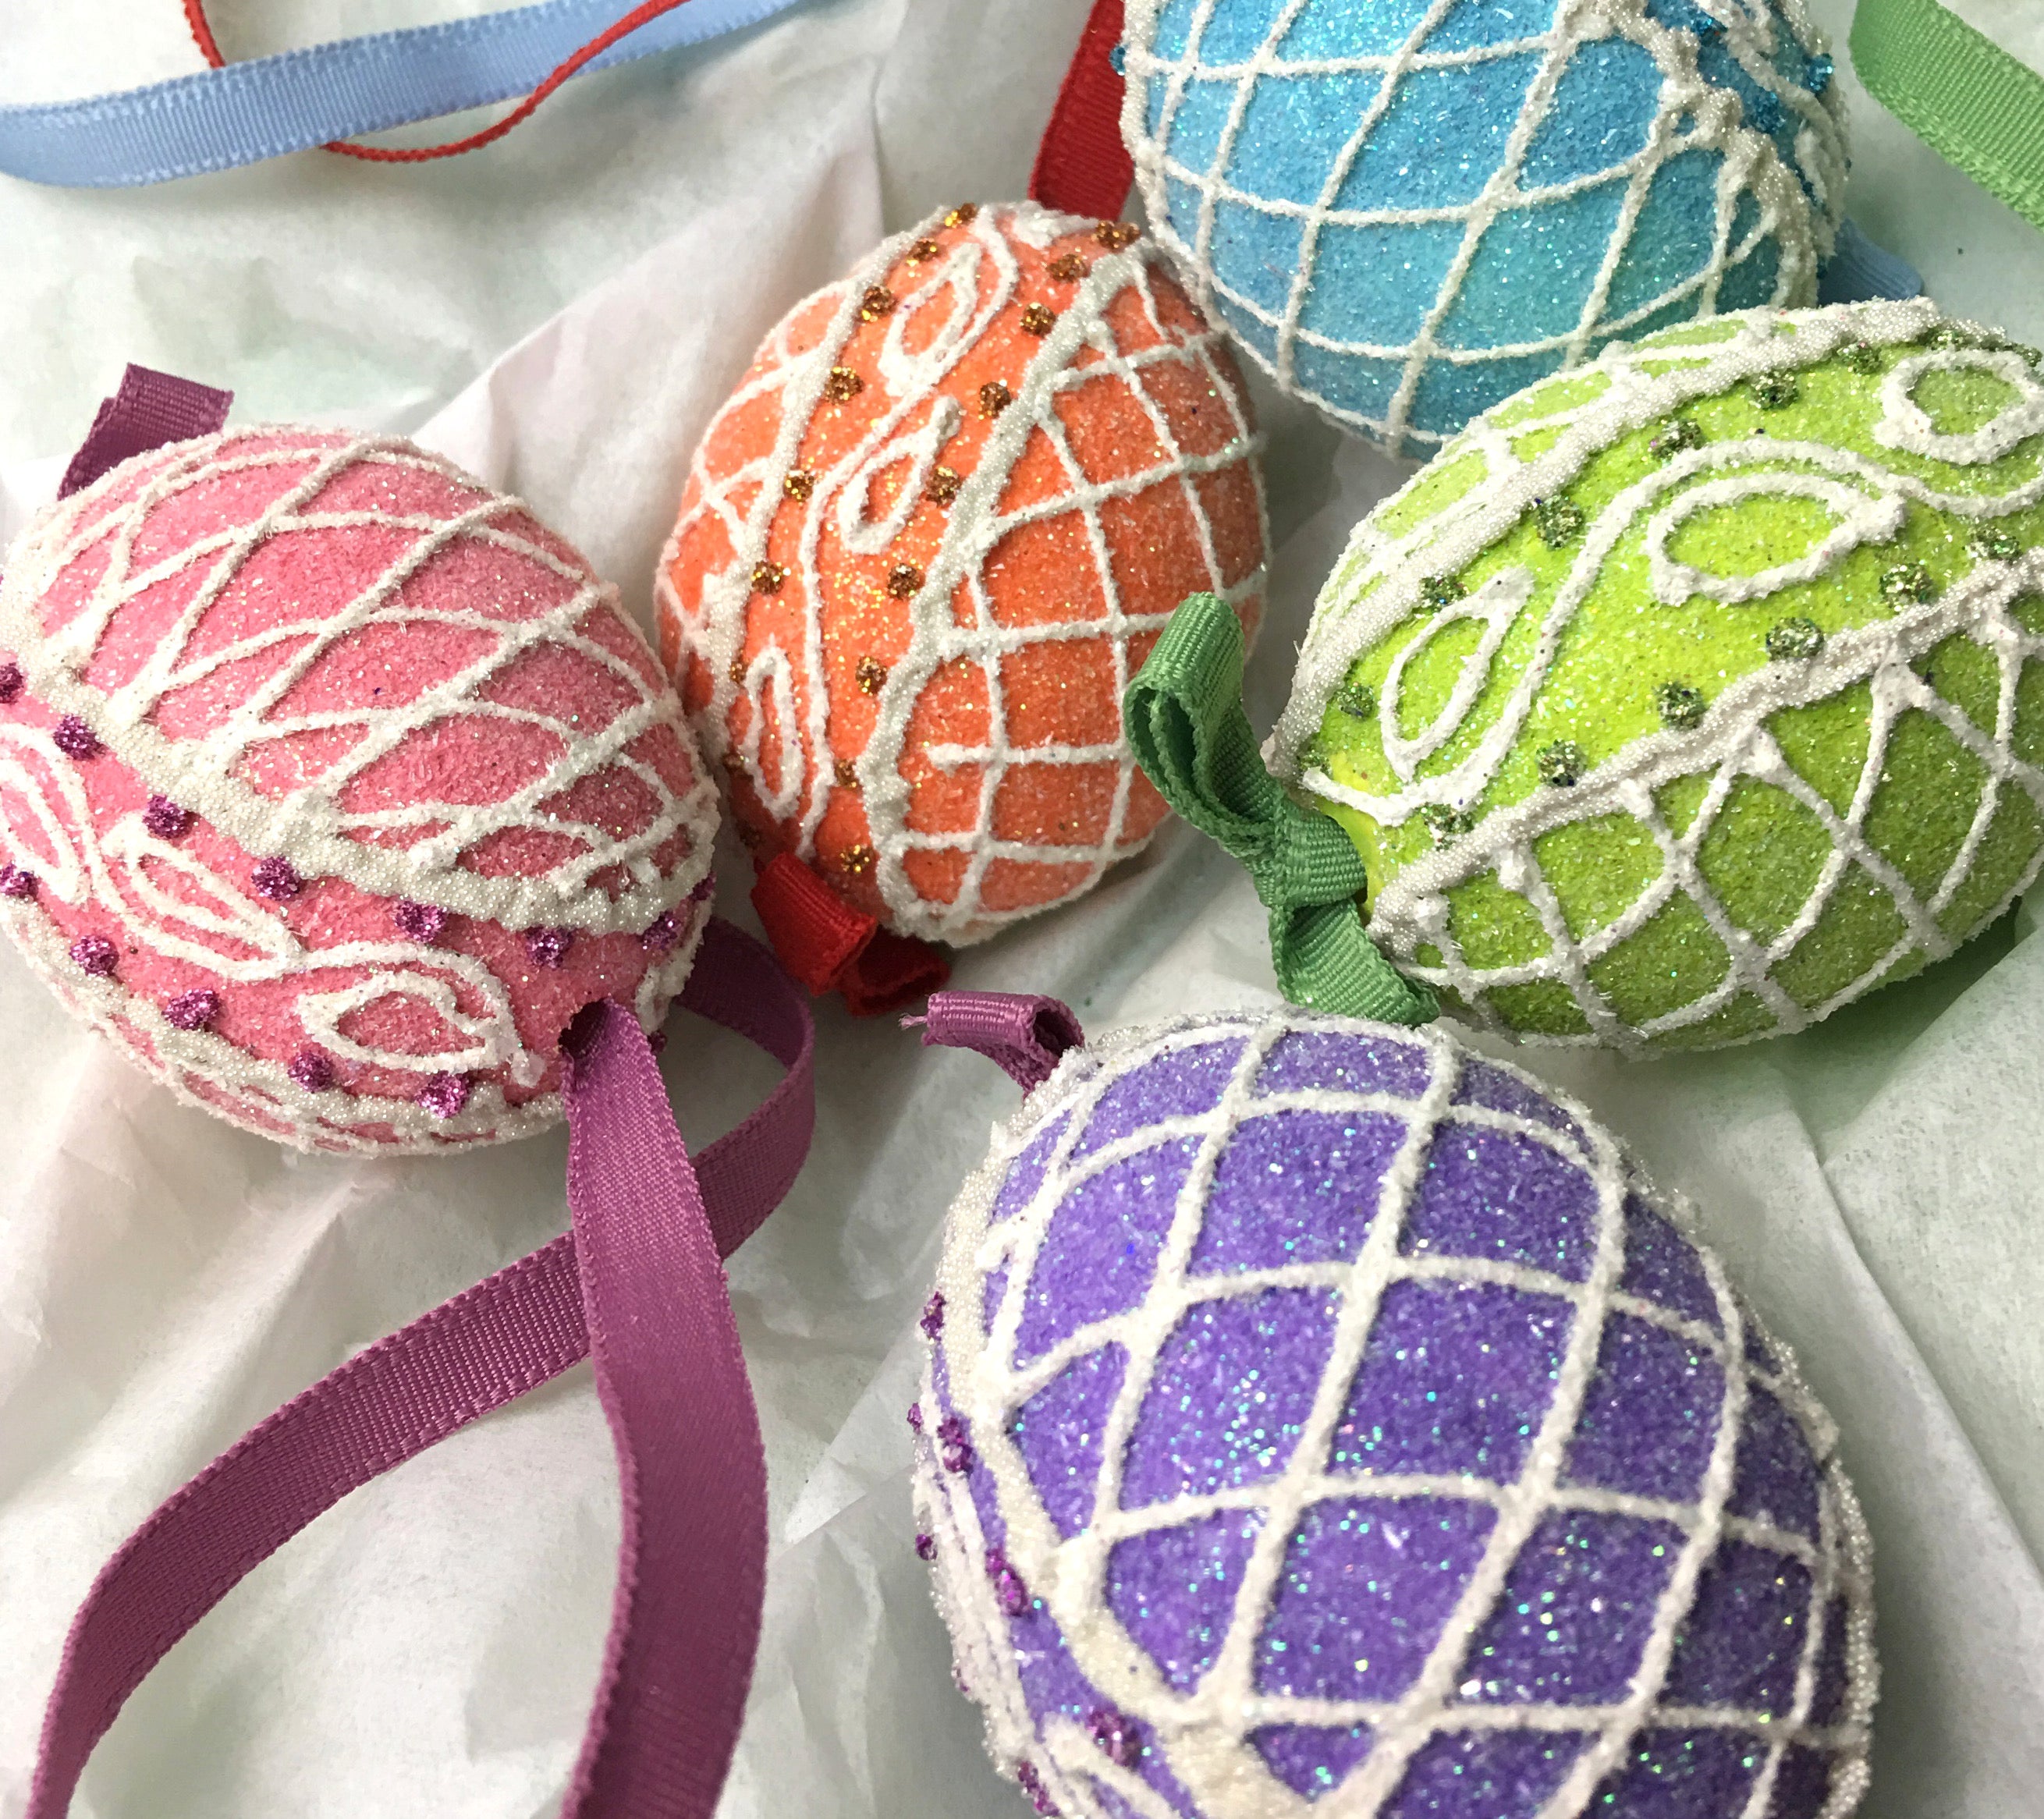 Easter Egg Ornaments decorated like Sugar Eggs